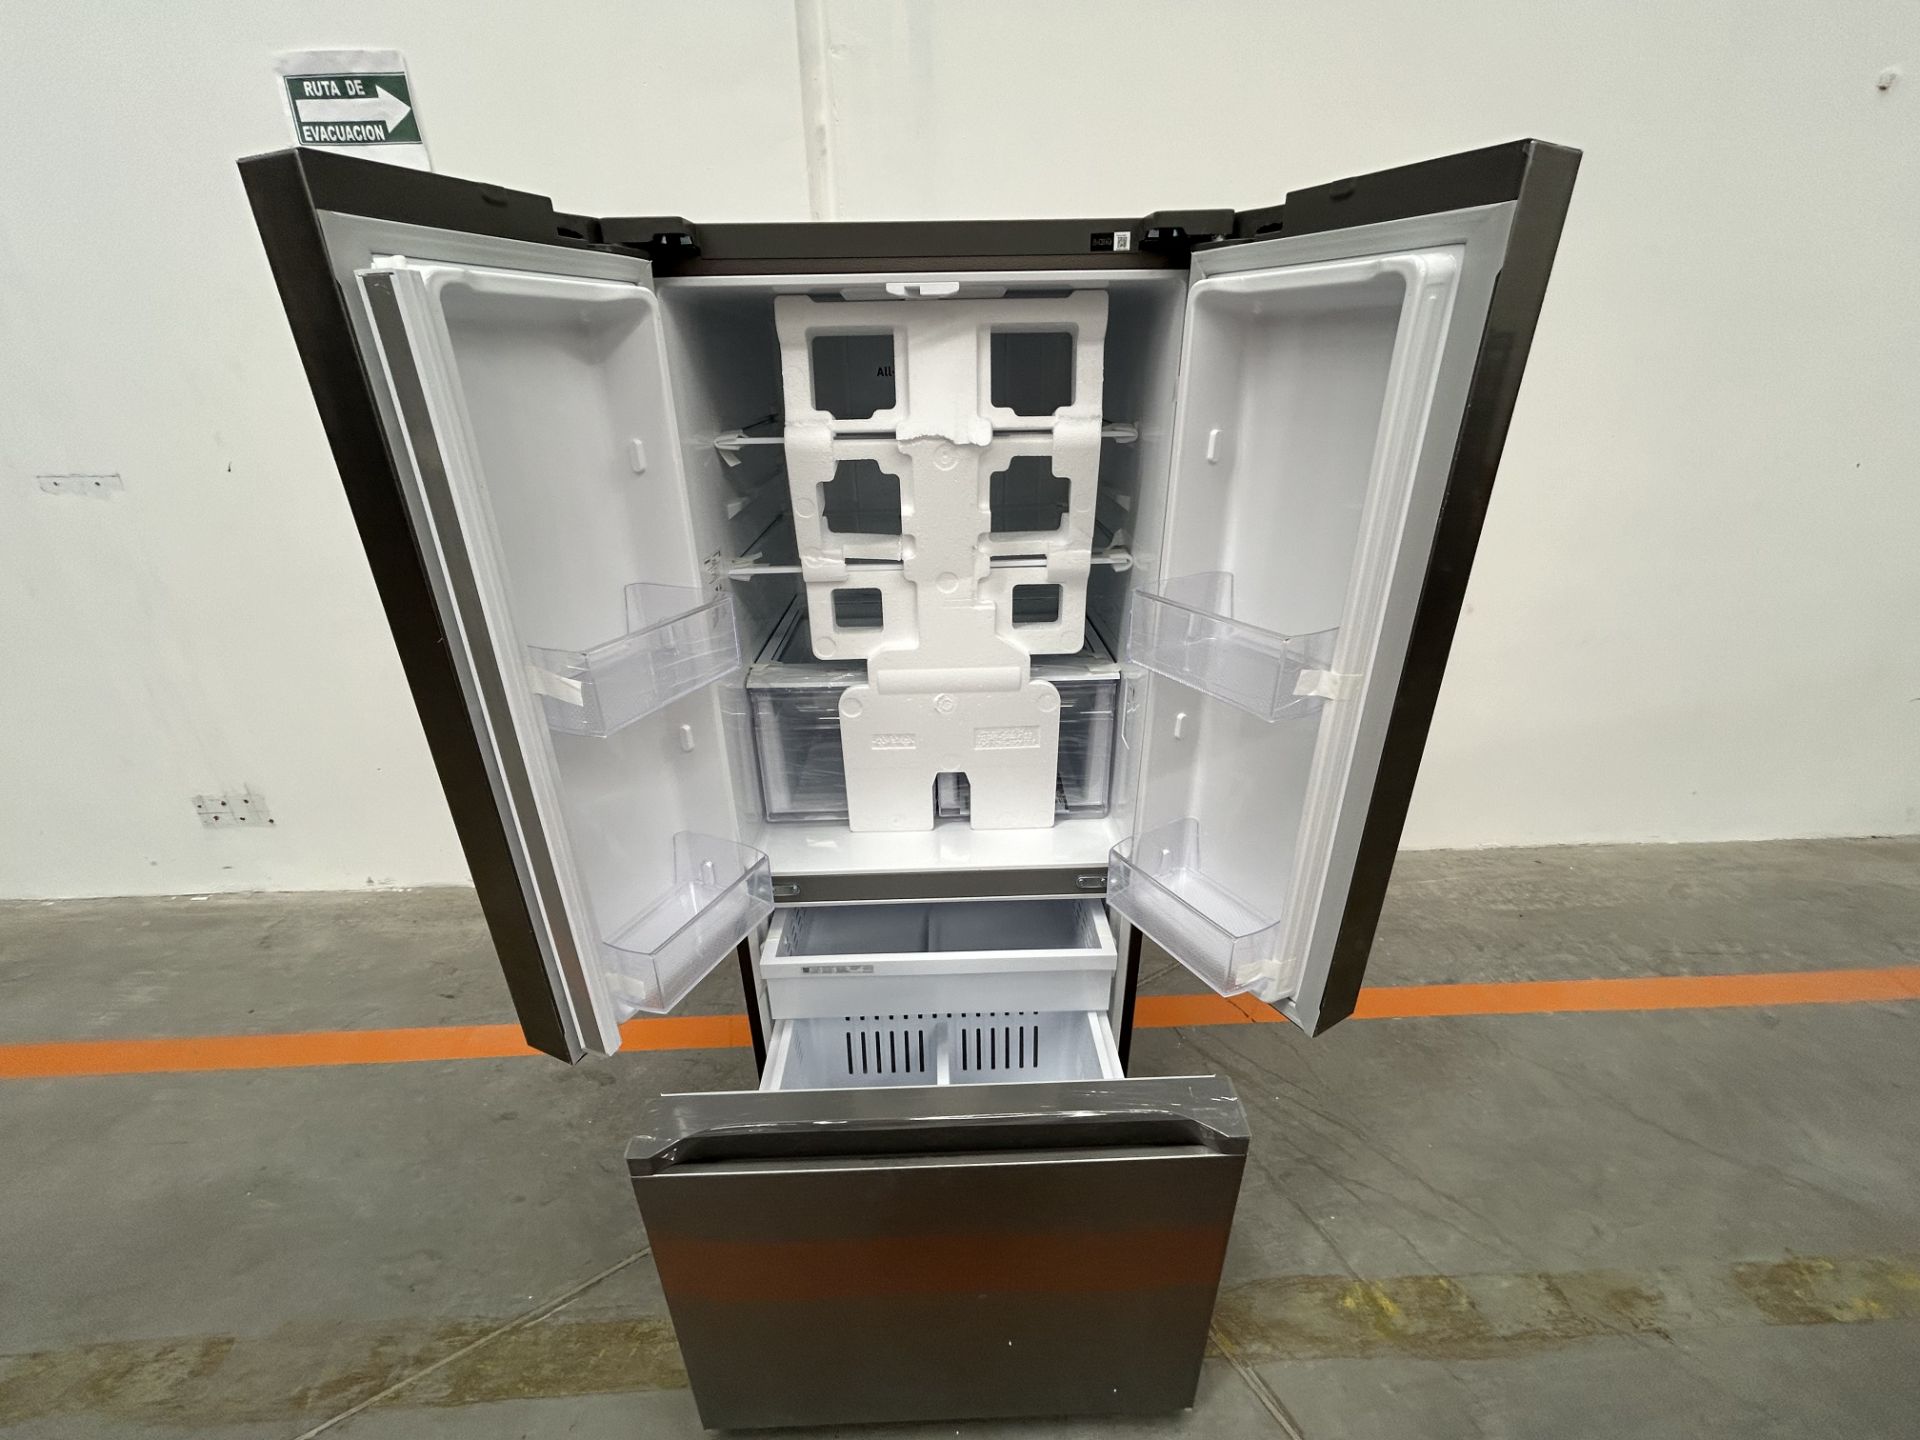 (NUEVO) Refrigerador Marca SAMSUNG, Modelo RF22A410S9, Serie 0016K, Color GRIS - Image 4 of 4